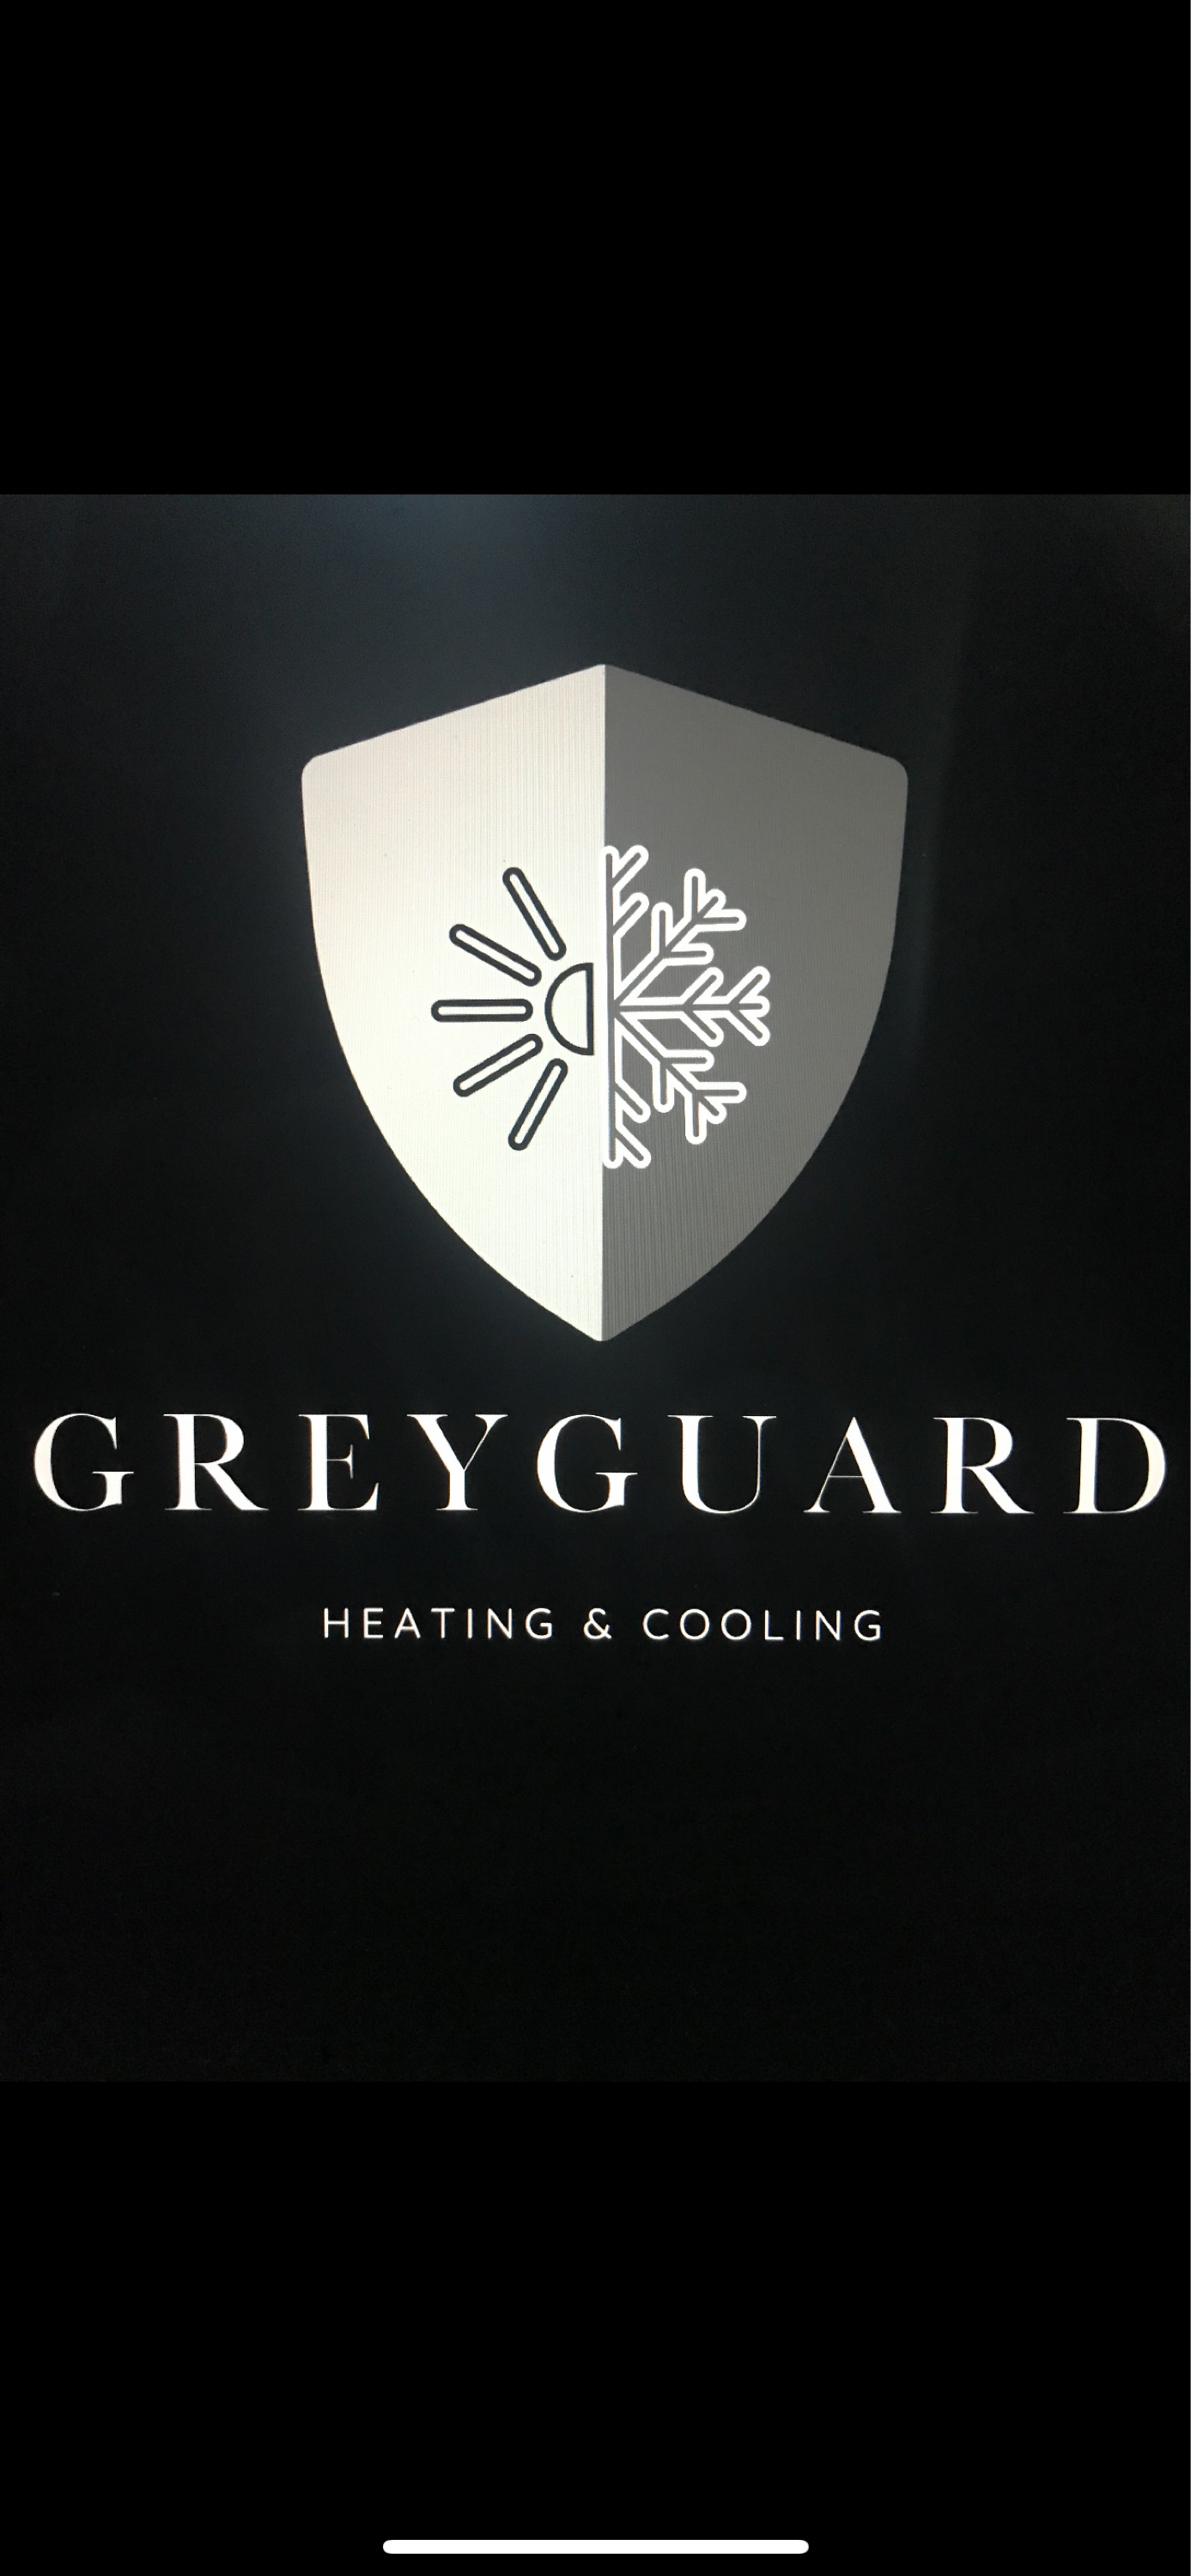 Greyguard Heating & Cooling Logo